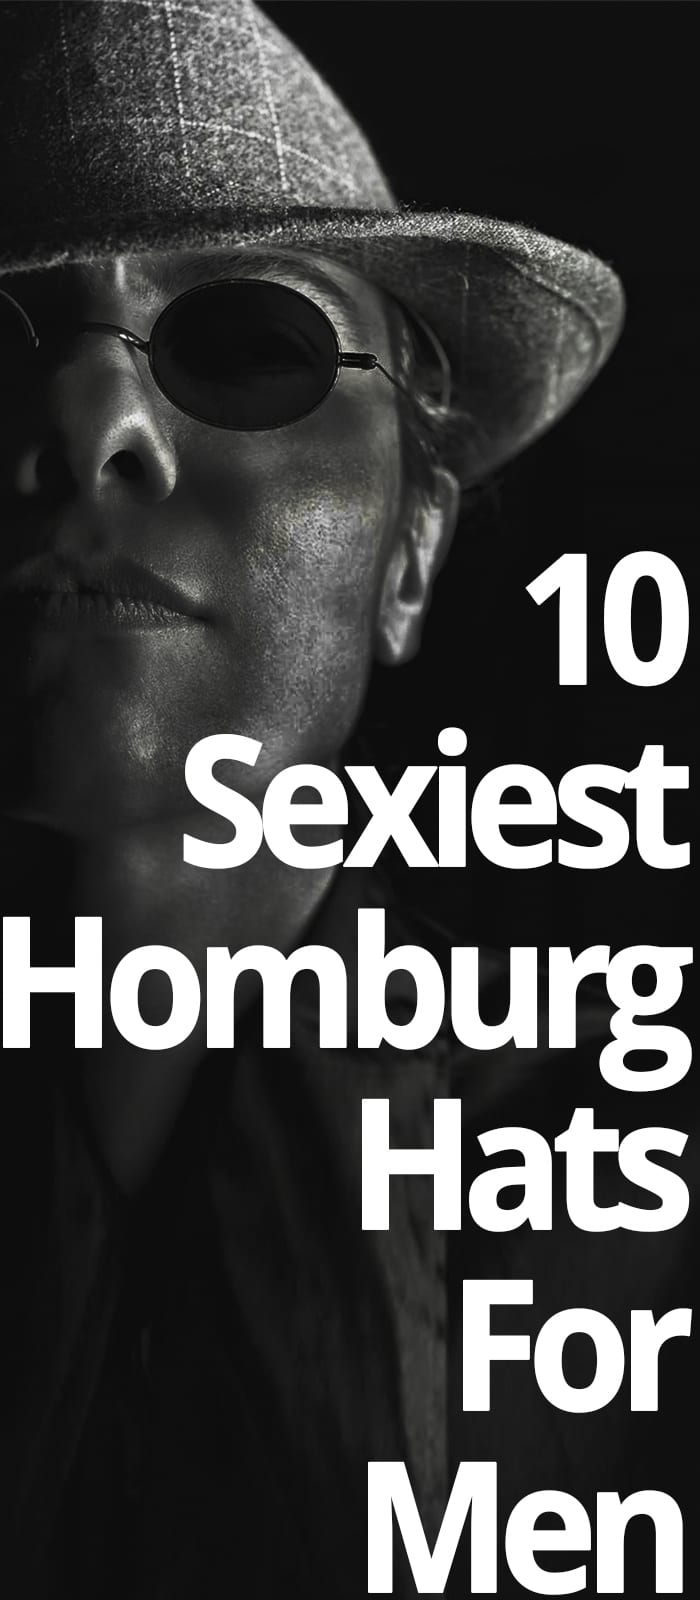 SEXIEST HOMBURG HATS FOR MEN